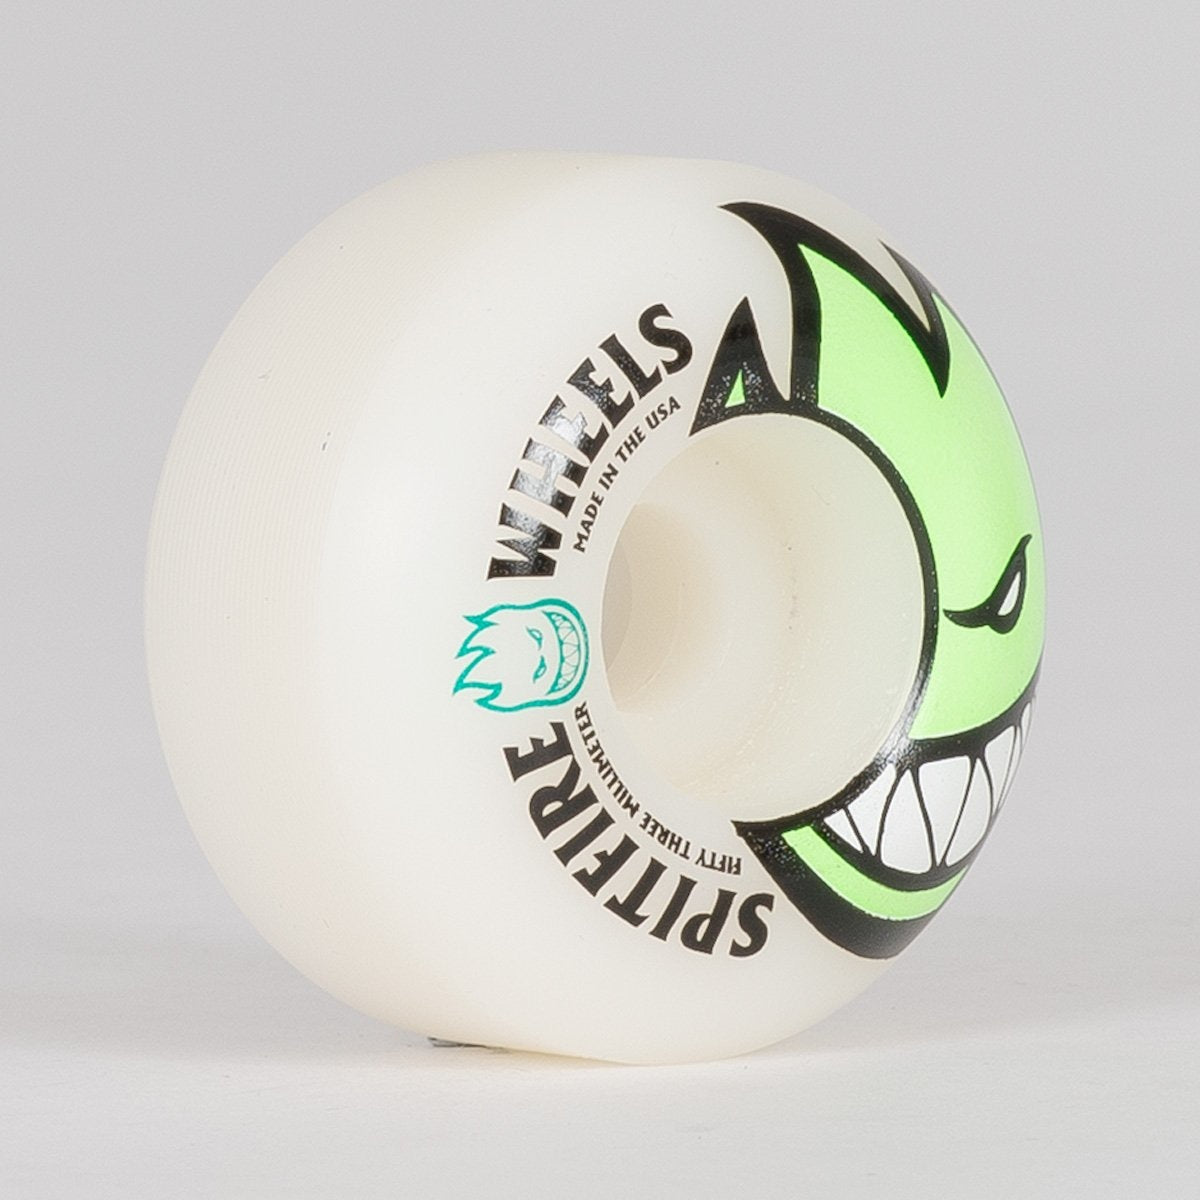 Spitfire Bighead Wheels White/Green 53mm - Skateboard